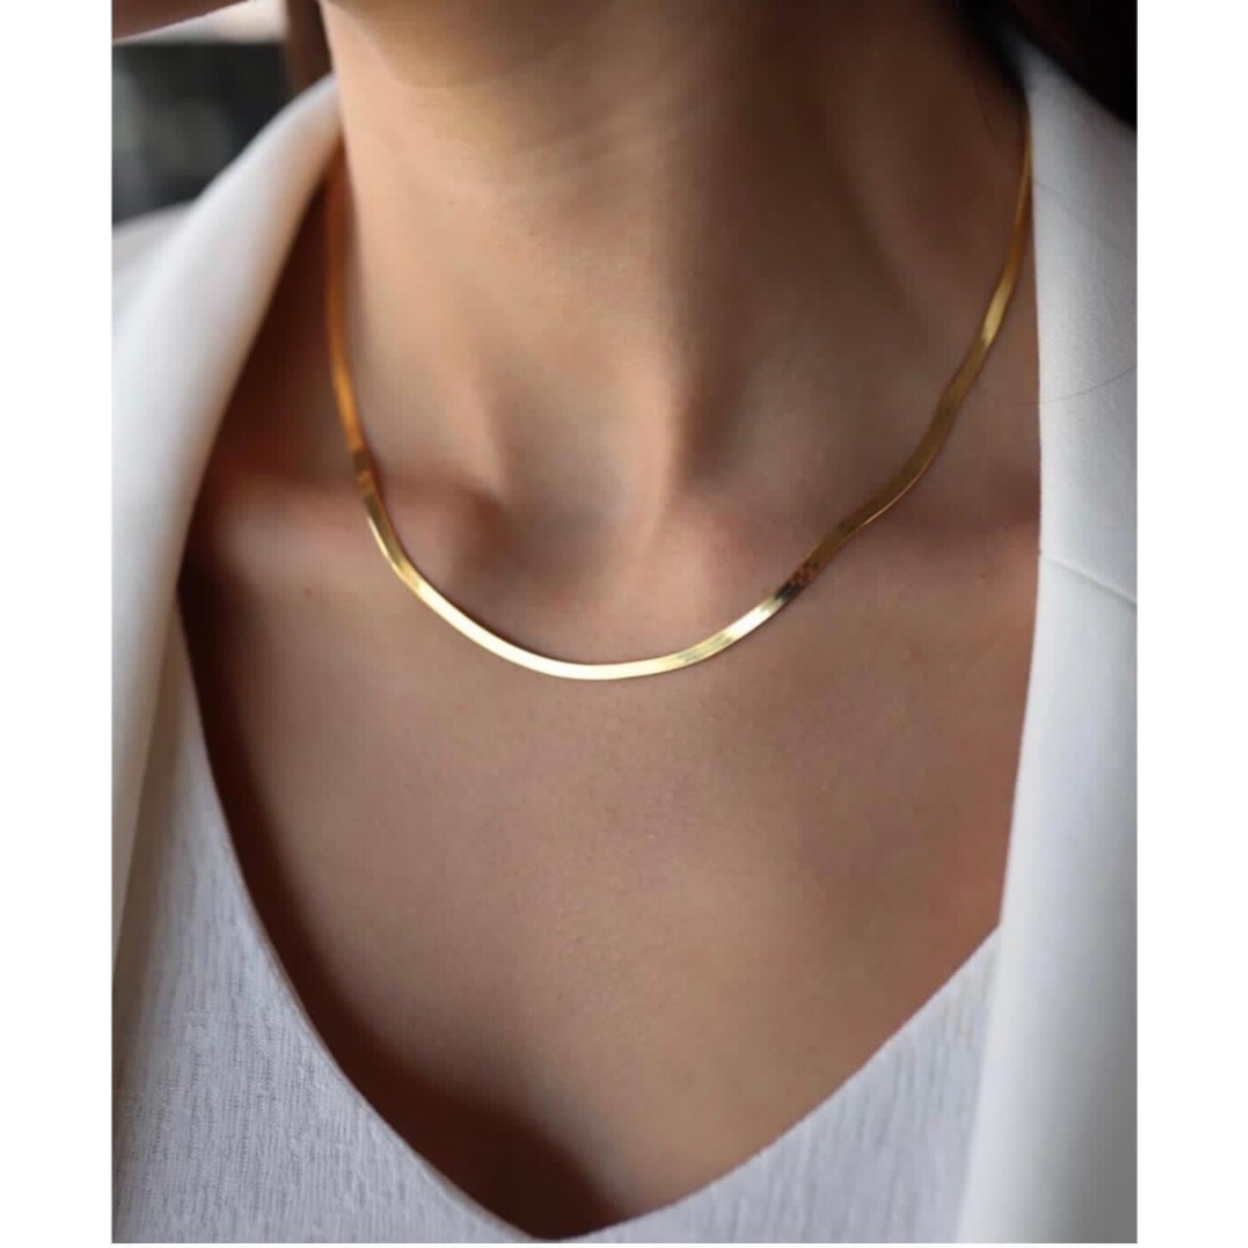 14k Gold Herringbone Necklace, Snake Chain, Gift For Mom, Mother's Day G - Yellow Bracelet 8''